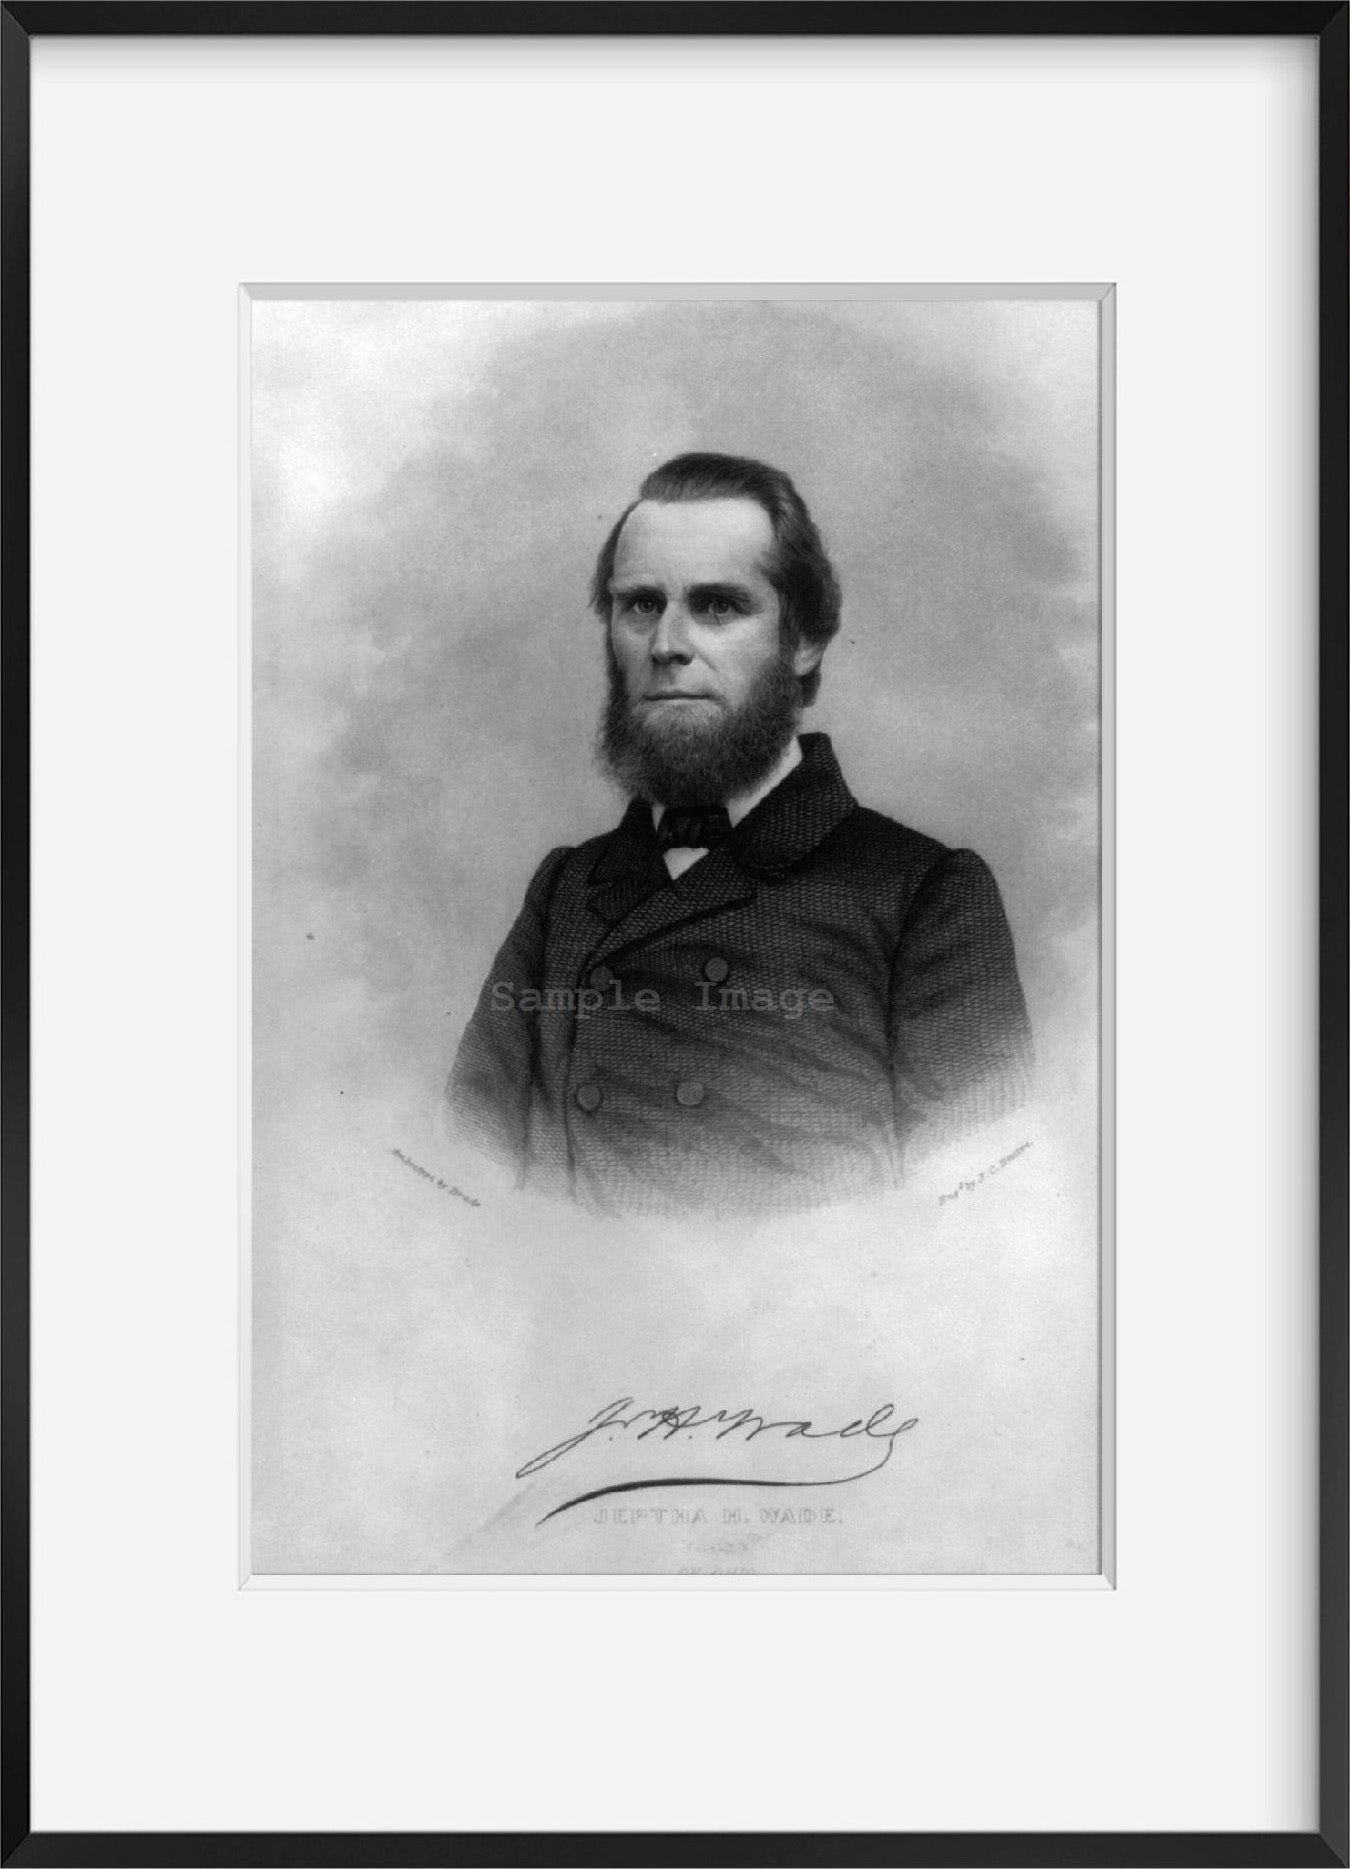 1859 photograph of Jeptha H. Wade of Ohio